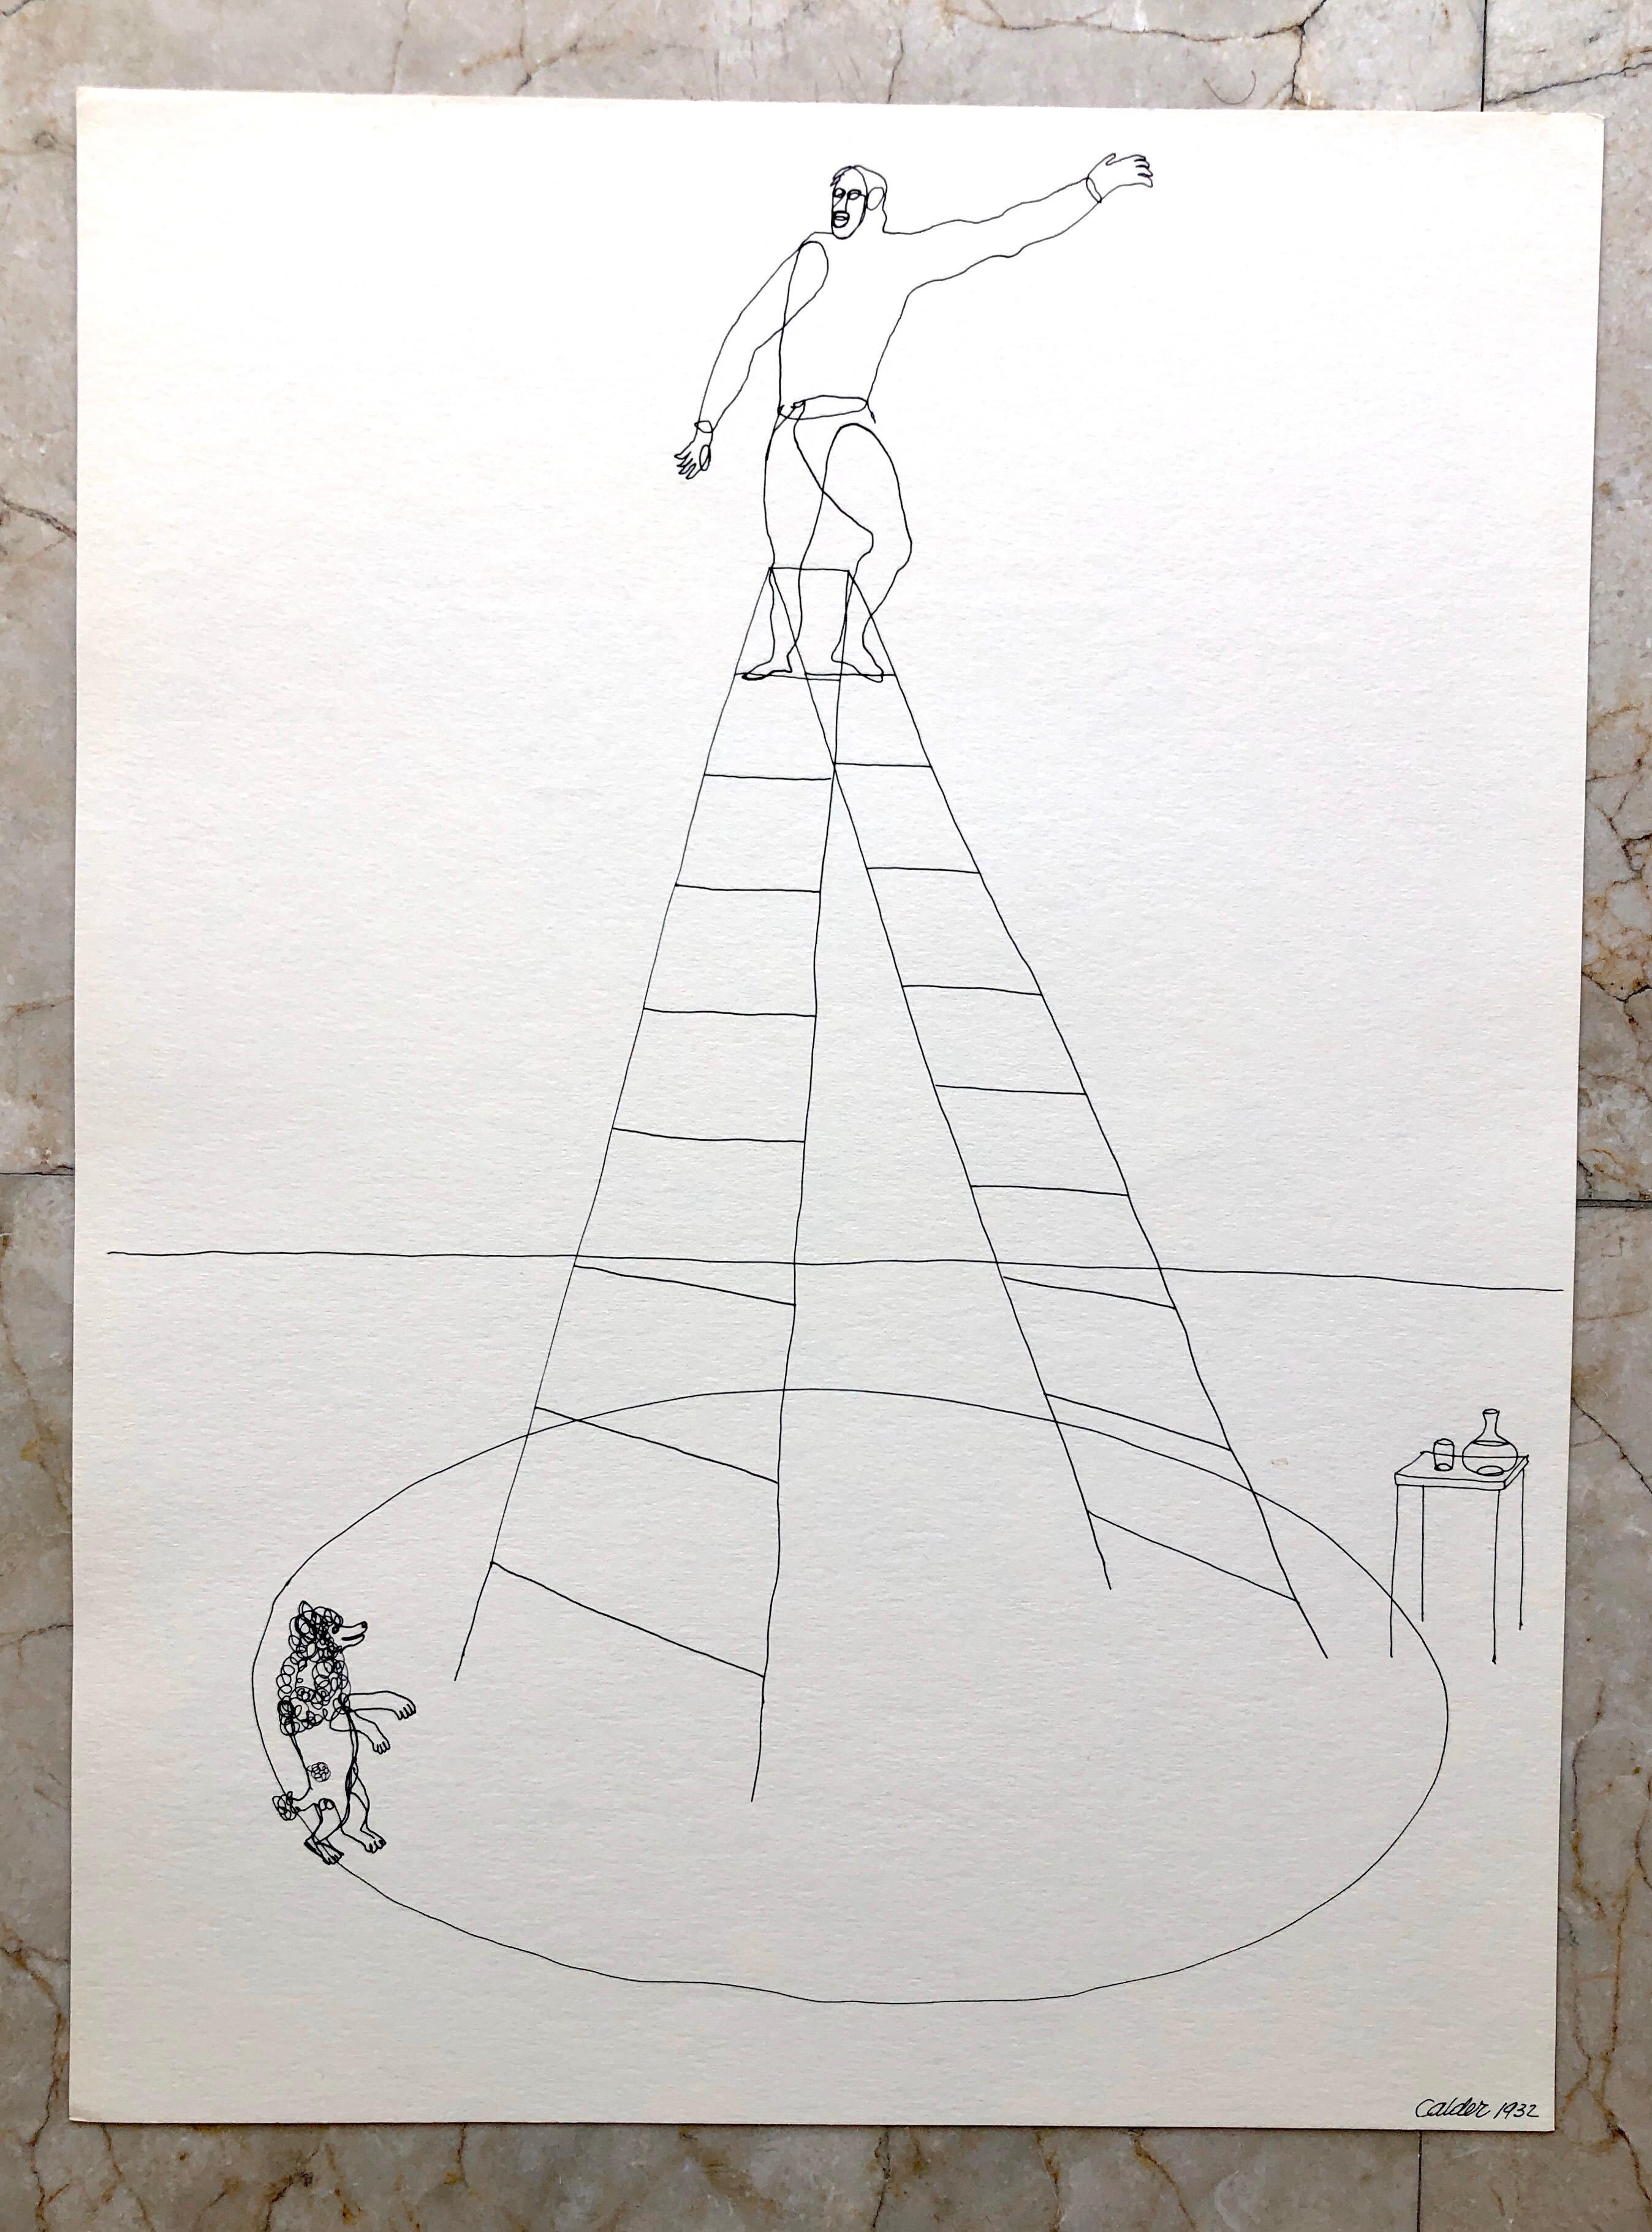 Alexander Calder Circus Reproduction Lithograph After a Drawing 2